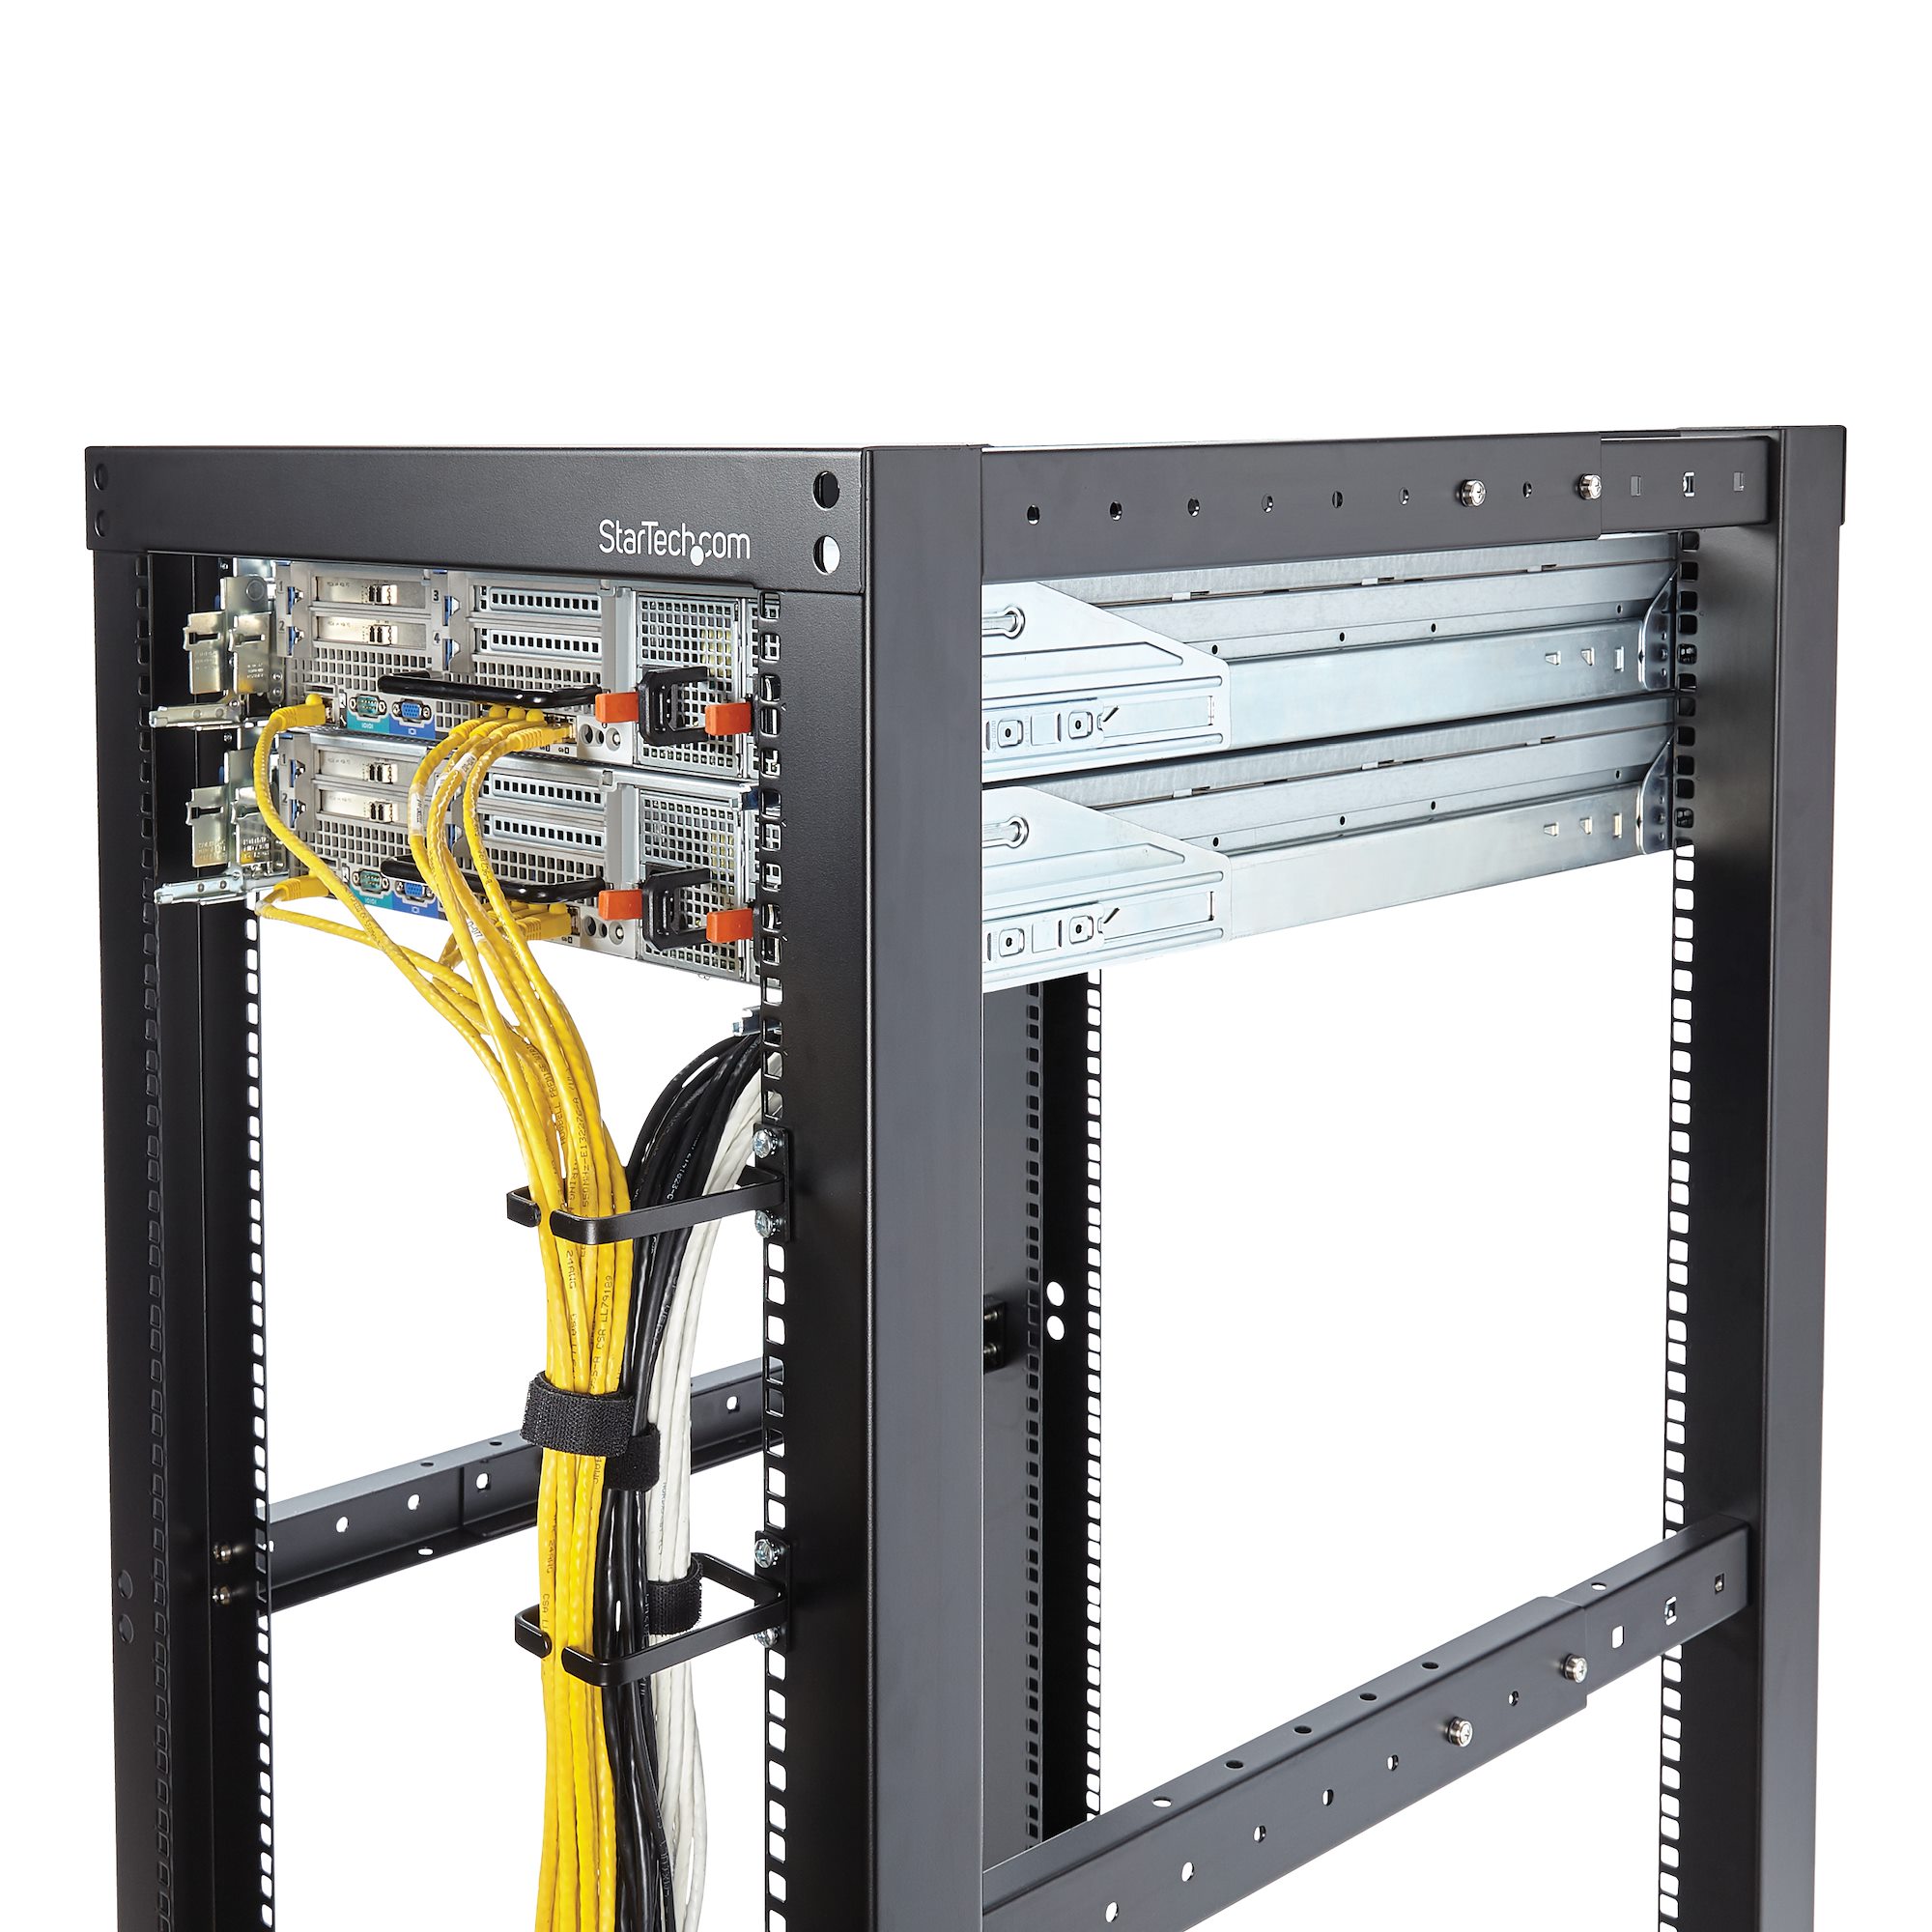 Startech.com Multi-directional Vertical Server Rack Cable Management D-ring Hook 